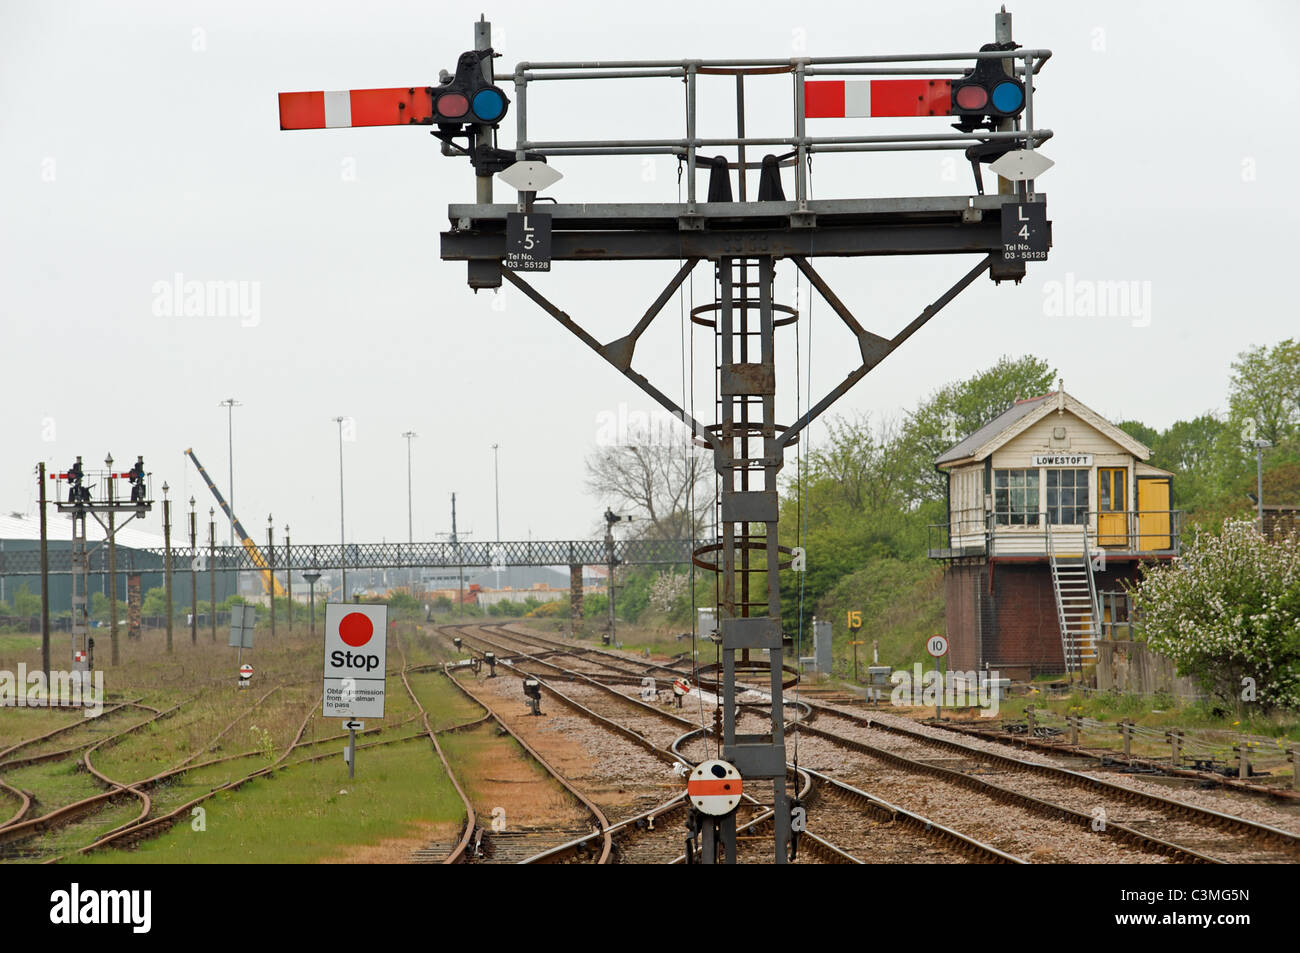 Pivoted arm railway signals, Lowestoft, Suffolk, UK. Stock Photo